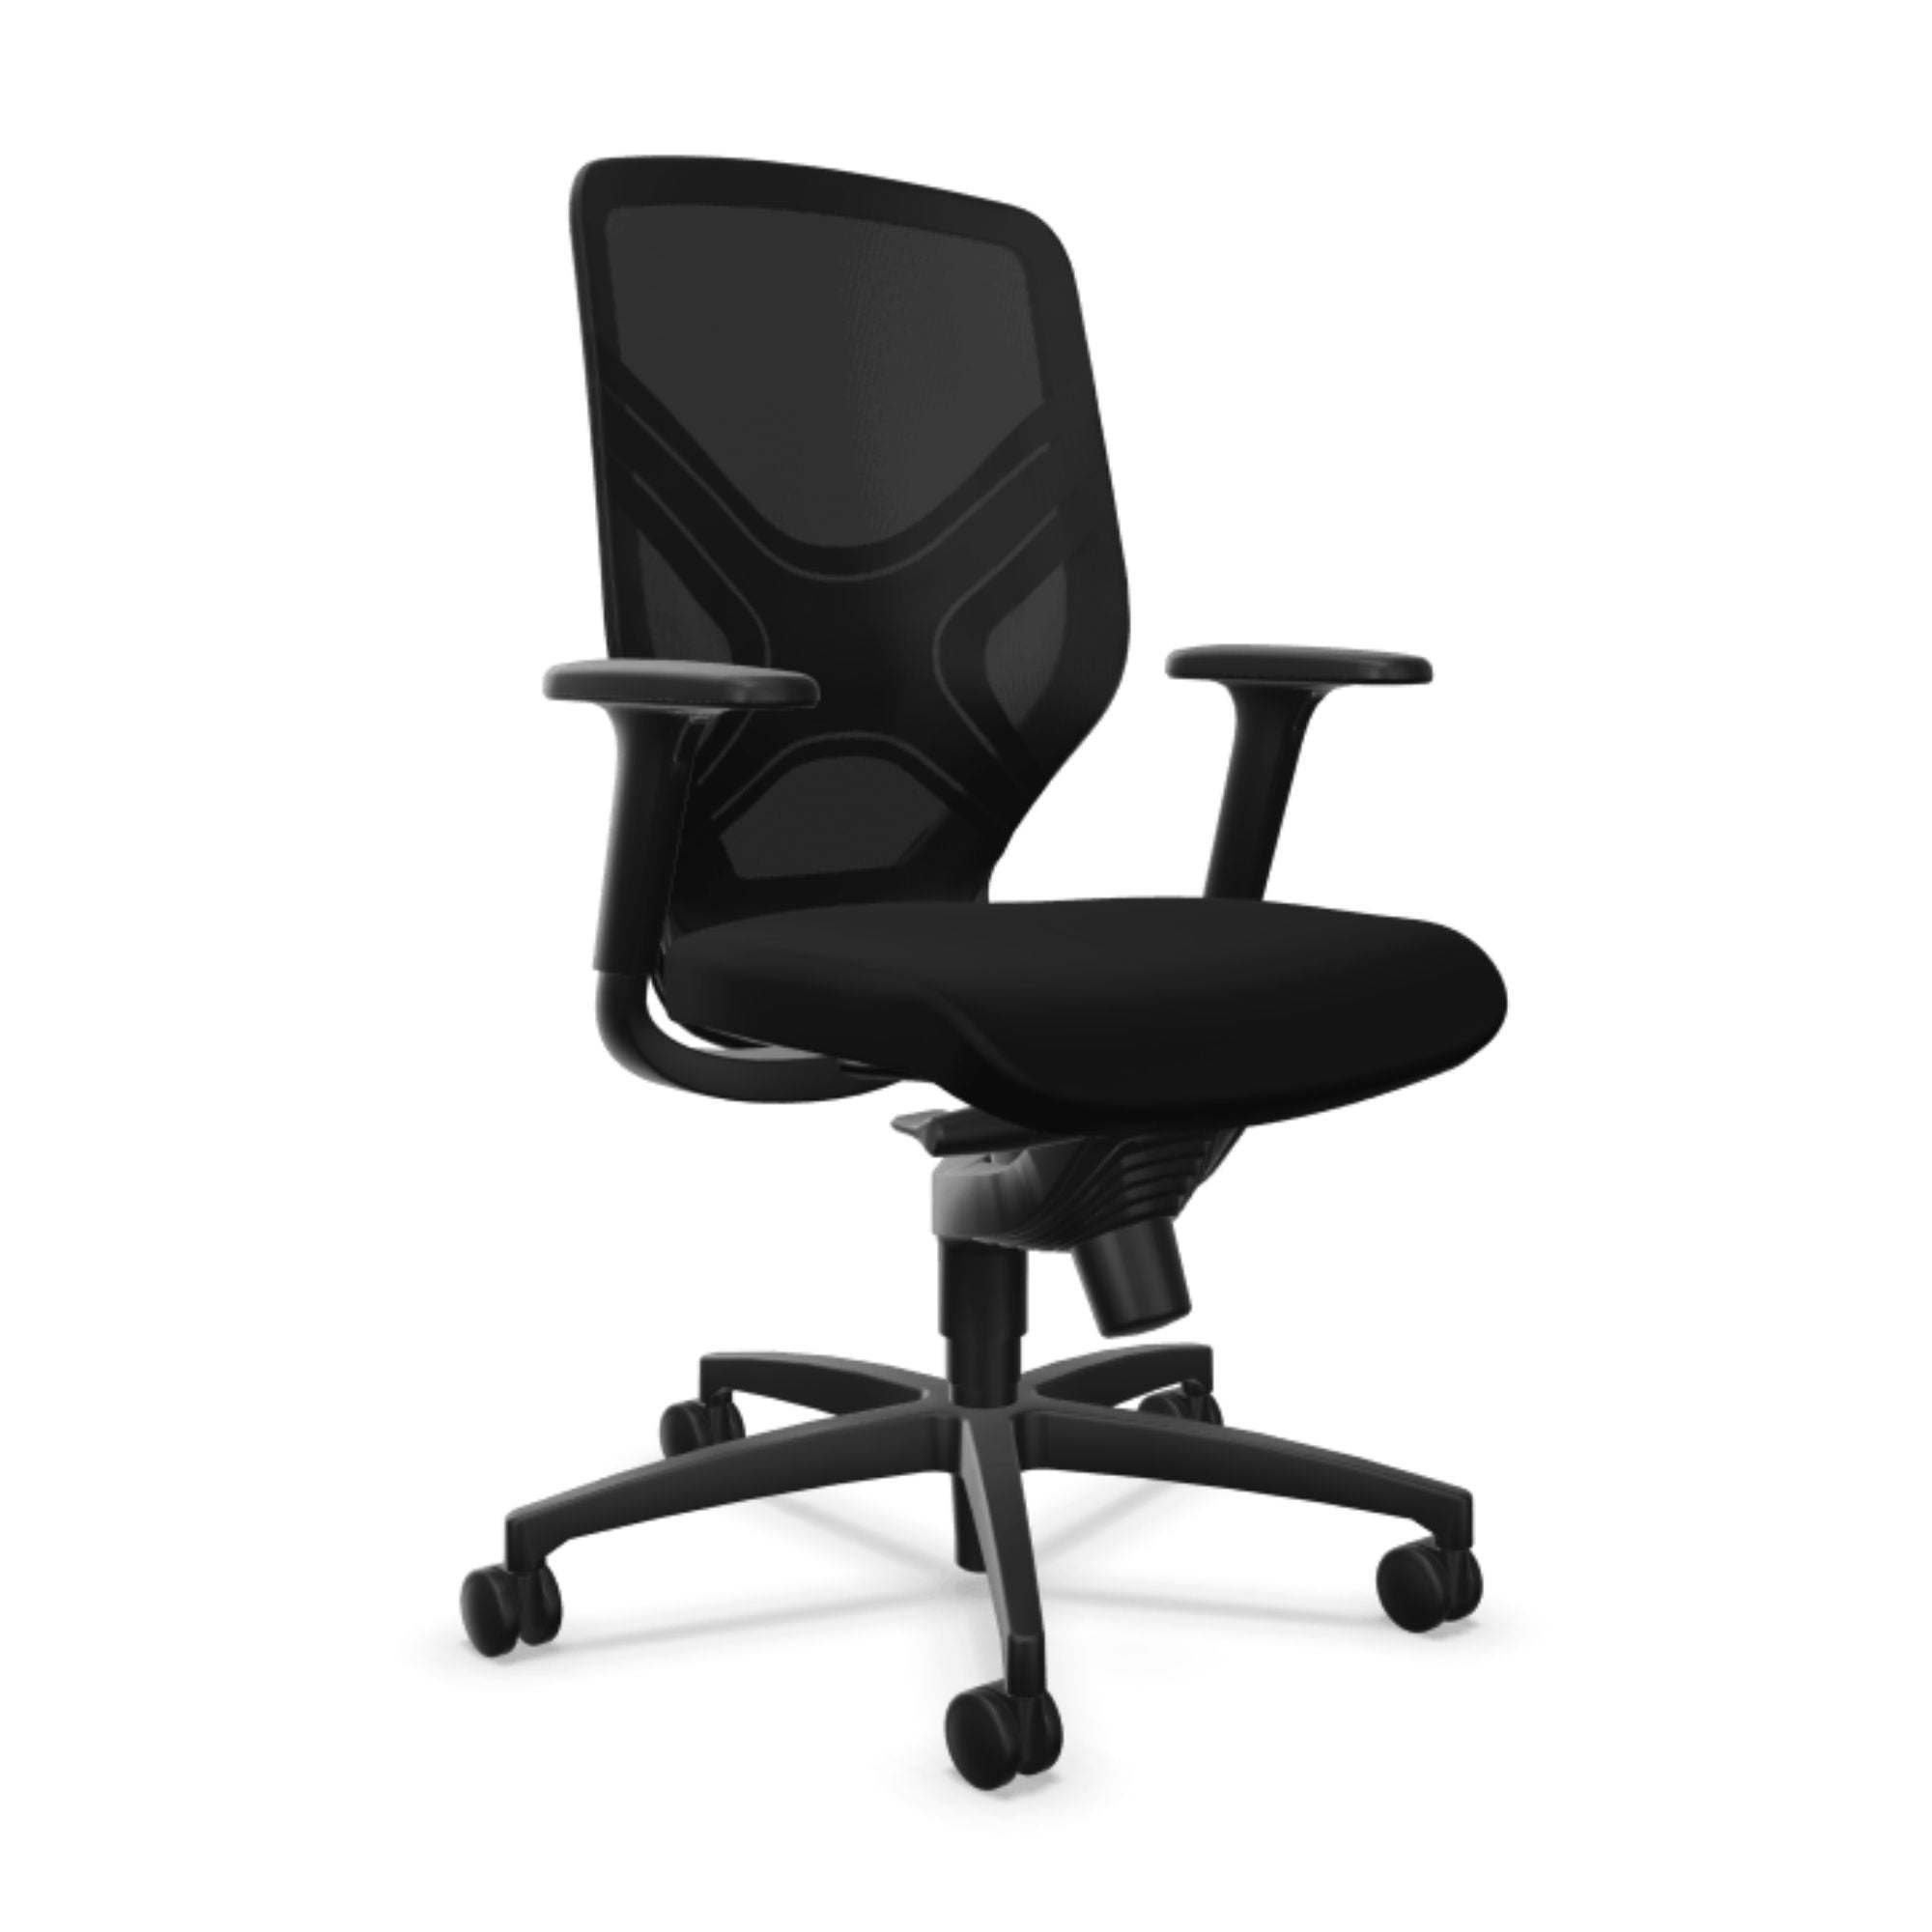 Wilkhahn In 184/7 Office Swivel Arm Chair